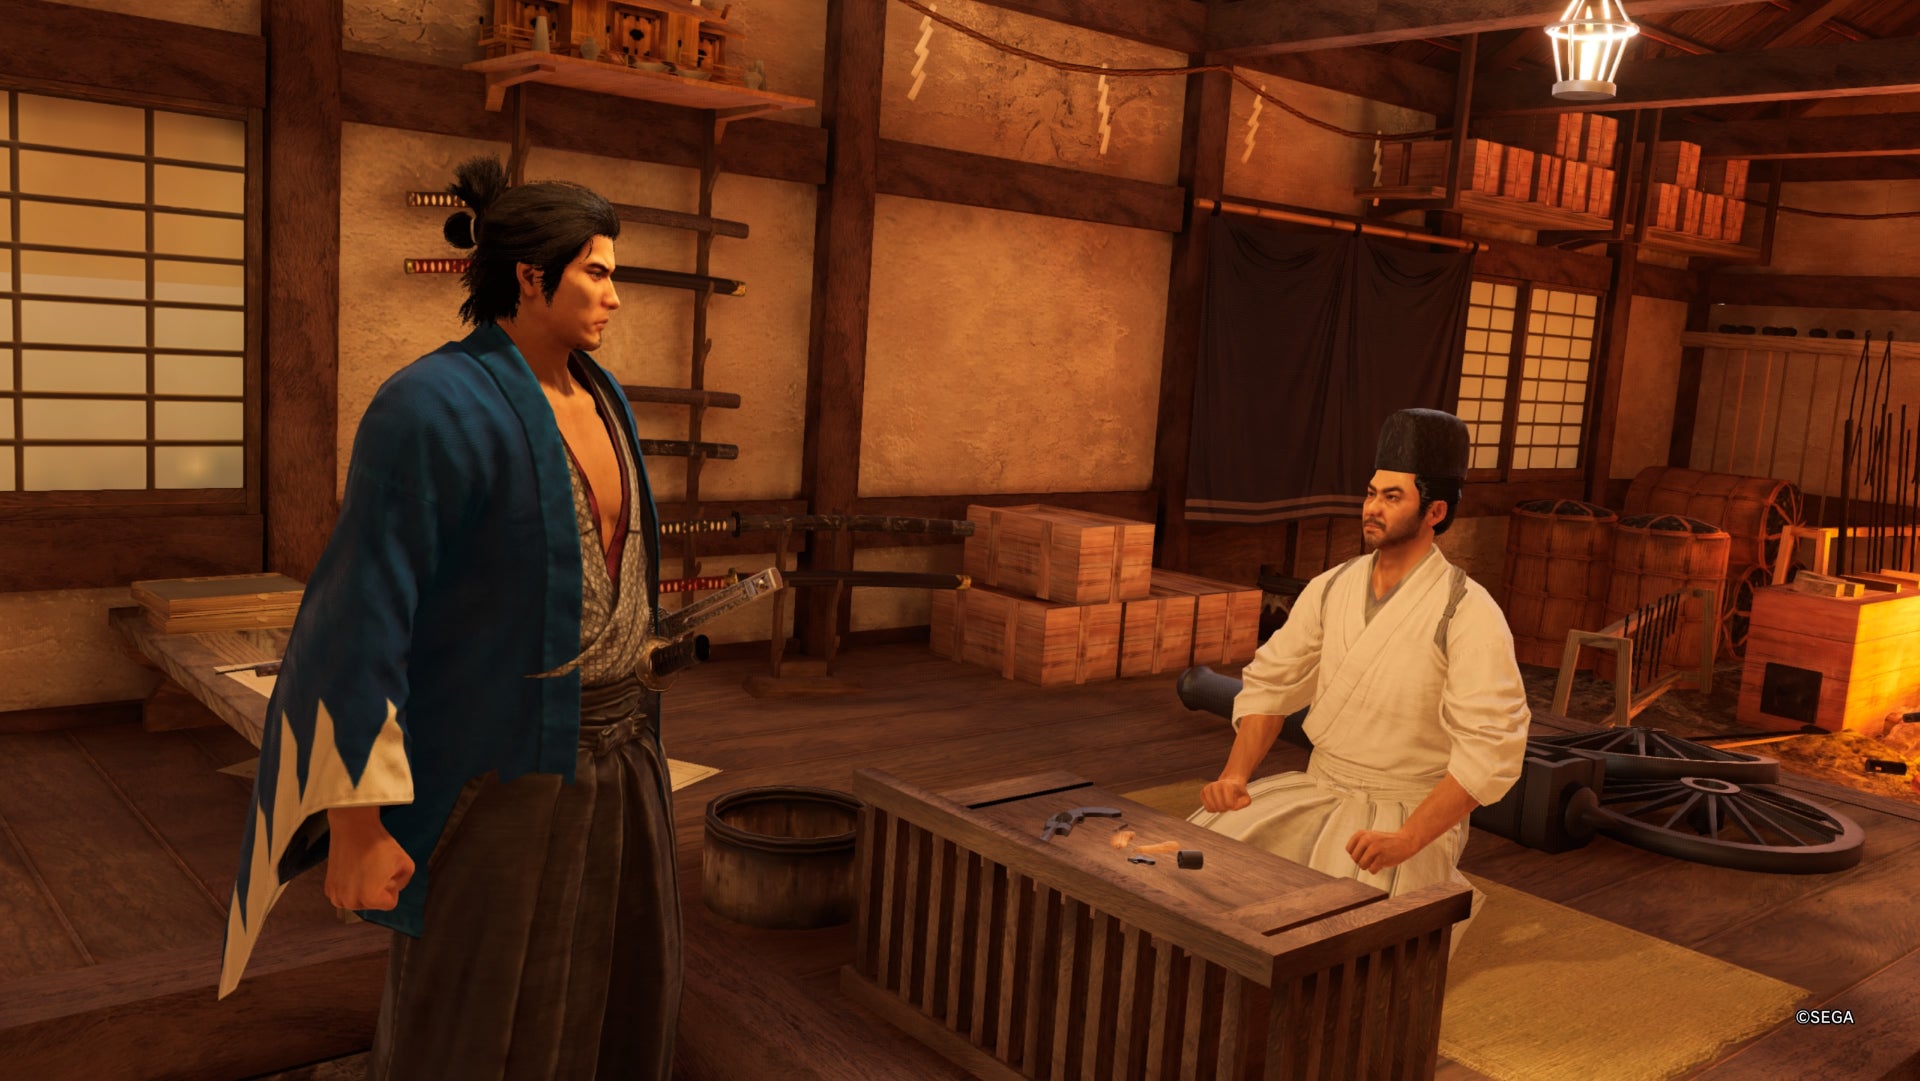 As an Ishin dragon, Ryoma faces the blacksmith in Kurogane Smithing